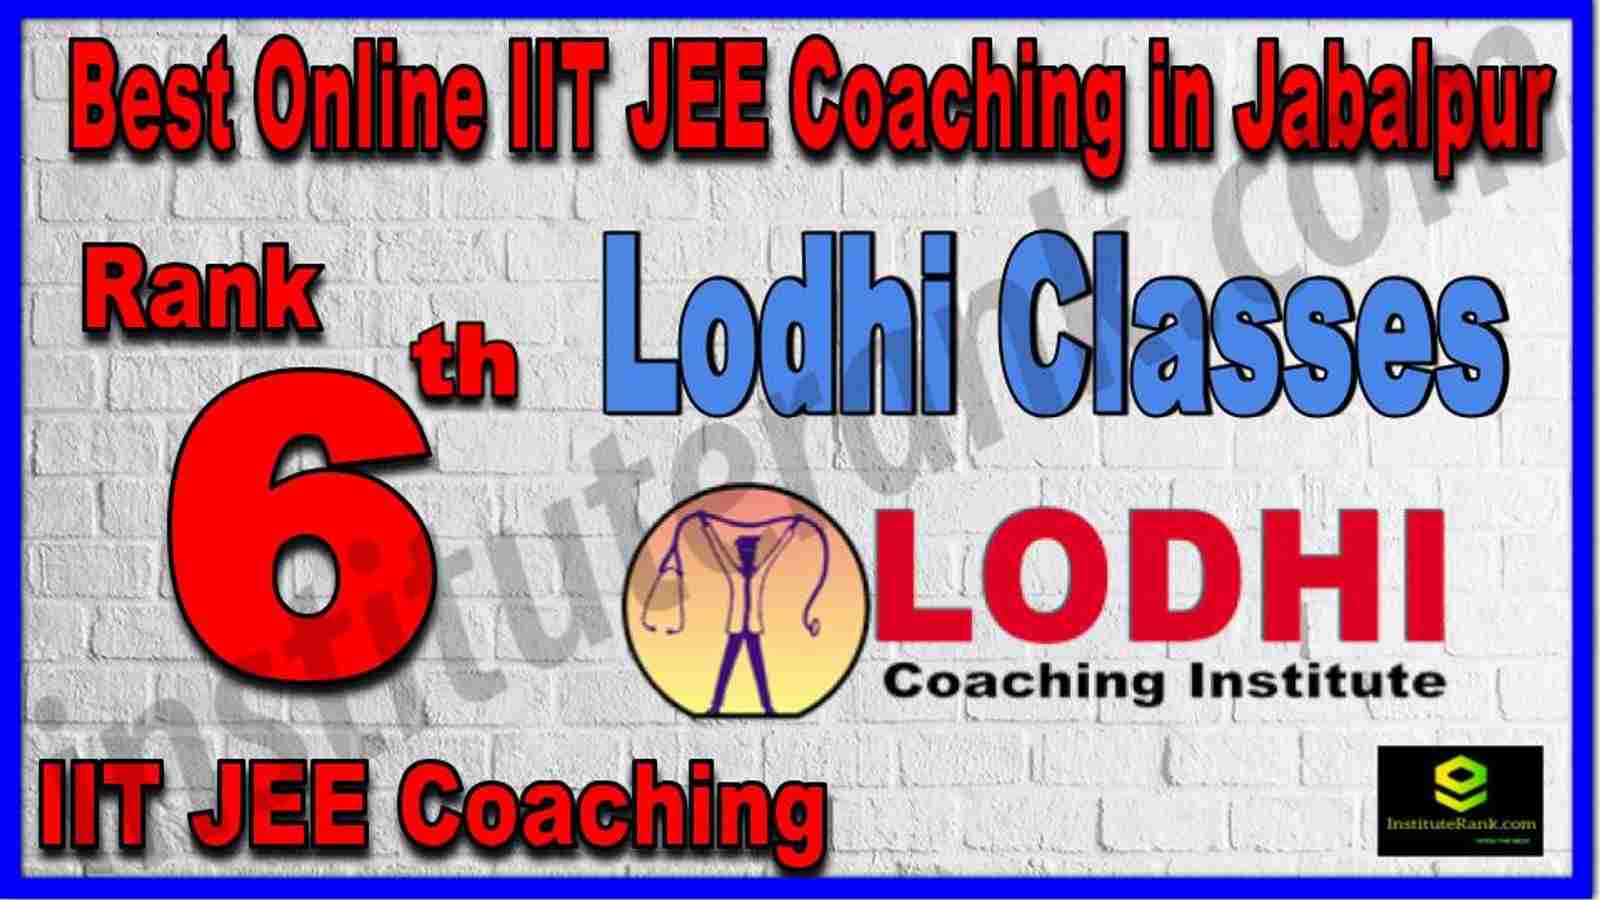 Rank 6th Best Online IIT JEE Coaching in Jabalpur